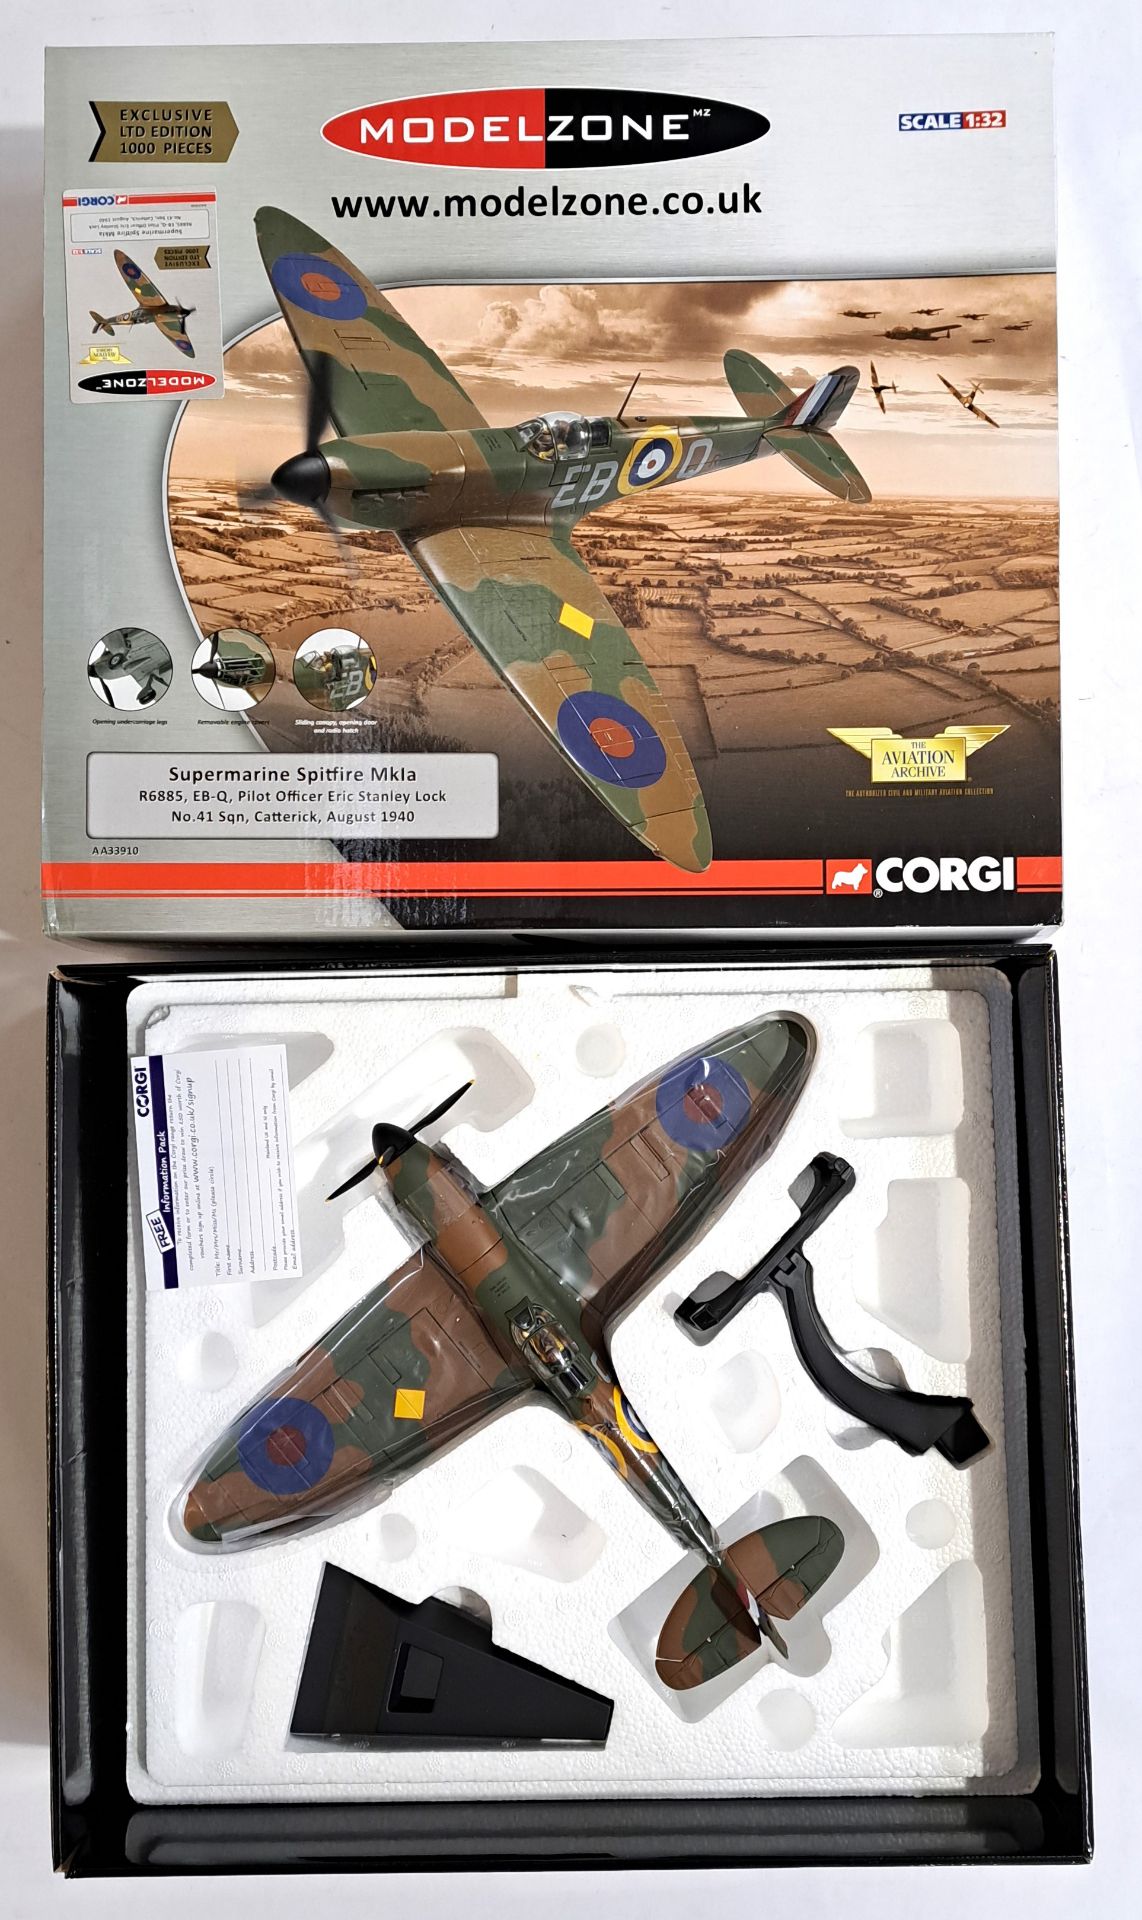 Corgi "Aviation Archive" (Model Zone) a boxed 1/32nd scale AA33910